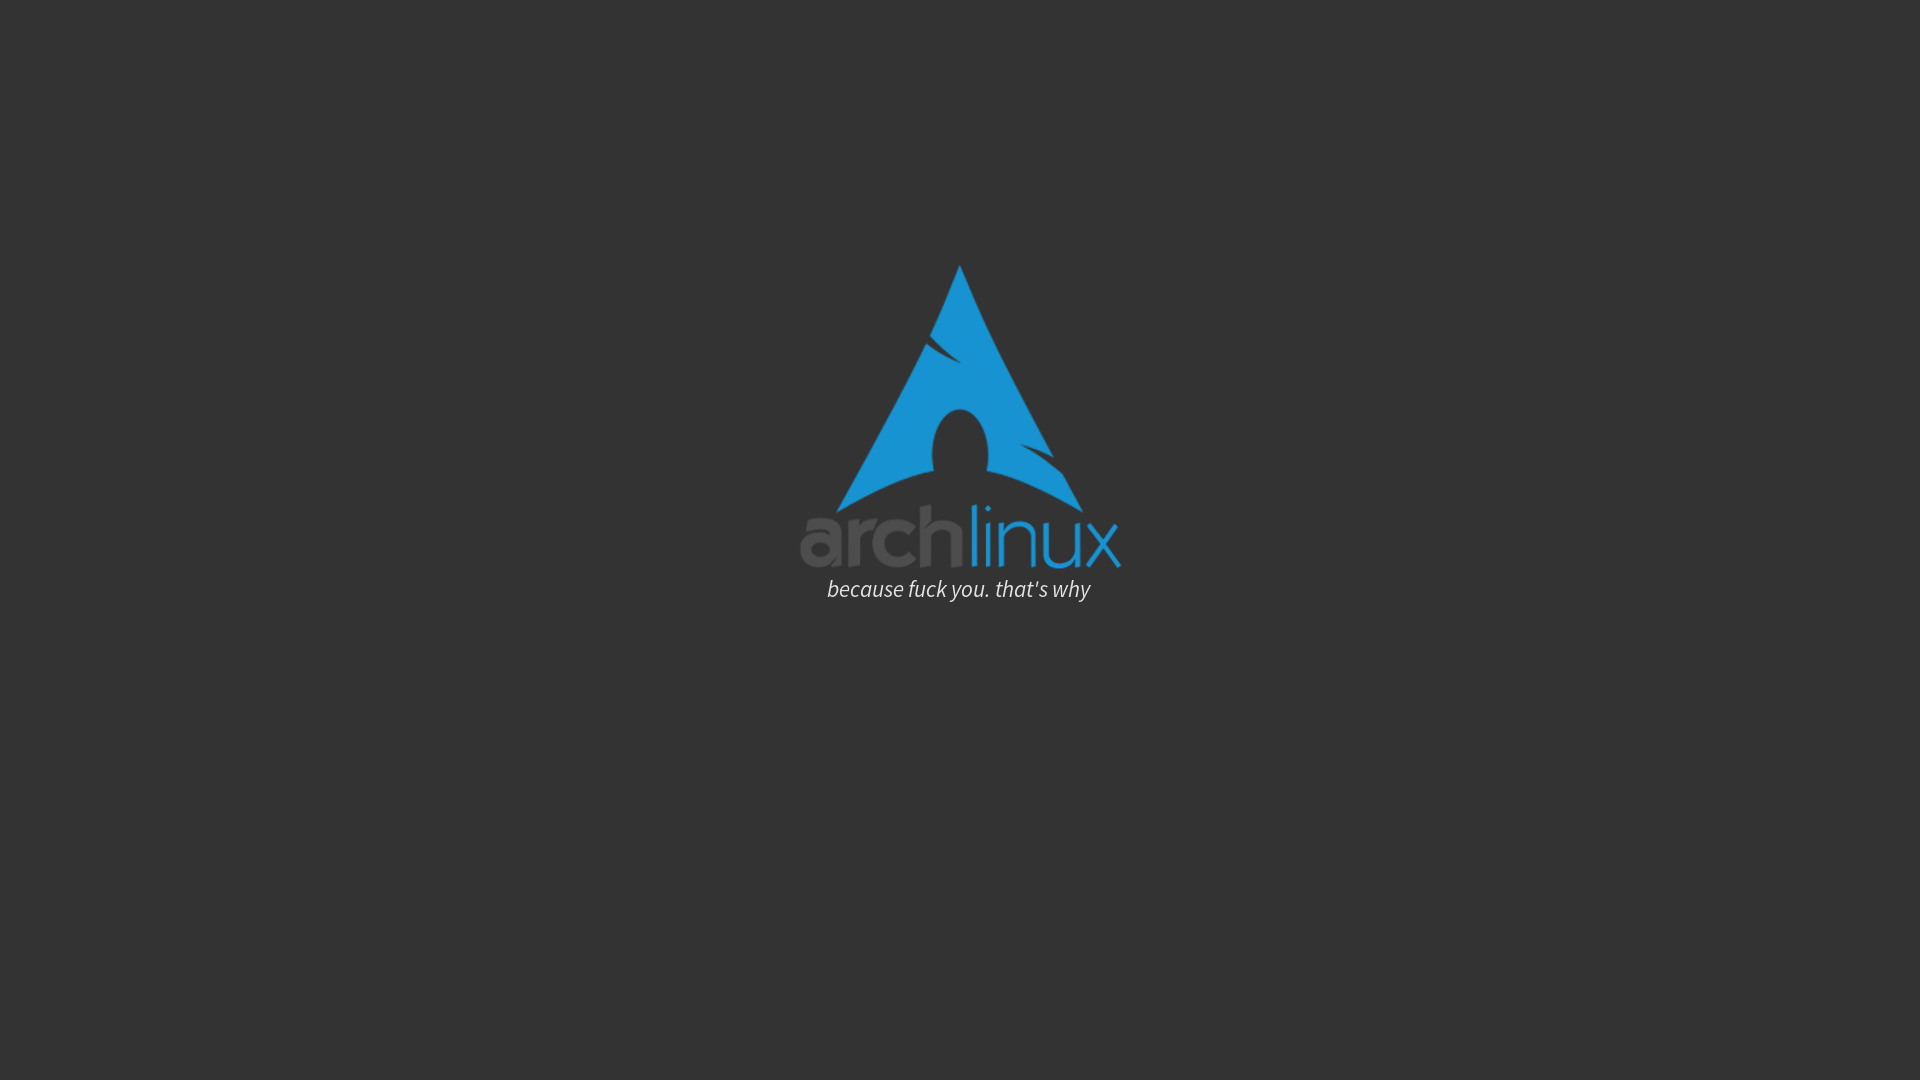 1920x1080 Archlinux, Linux, Arch Linux. music, Album covers, Rage Against the Machine  Wallpaper HD